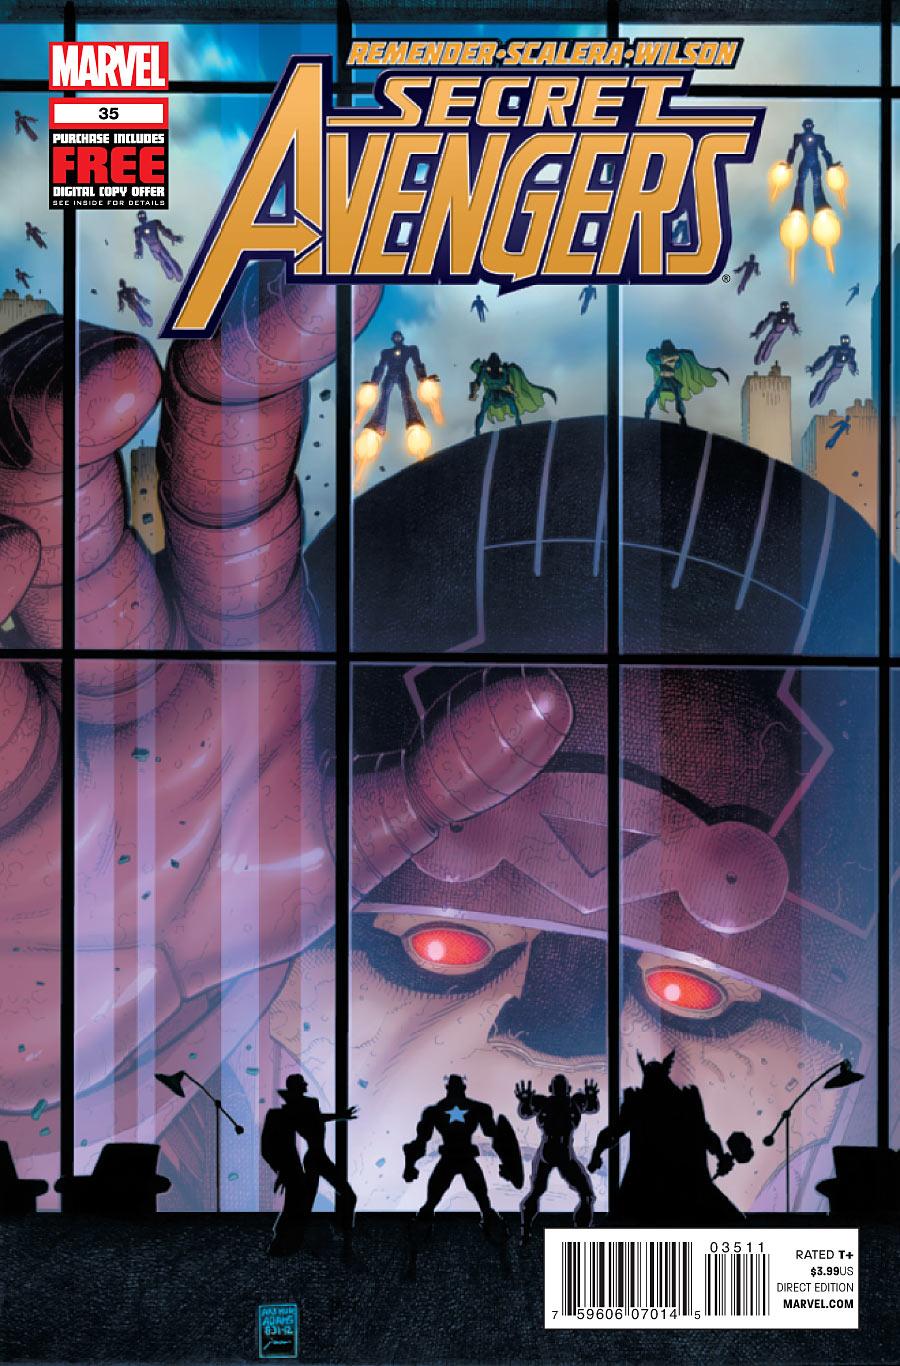 Secret Avengers Vol. 1 #35